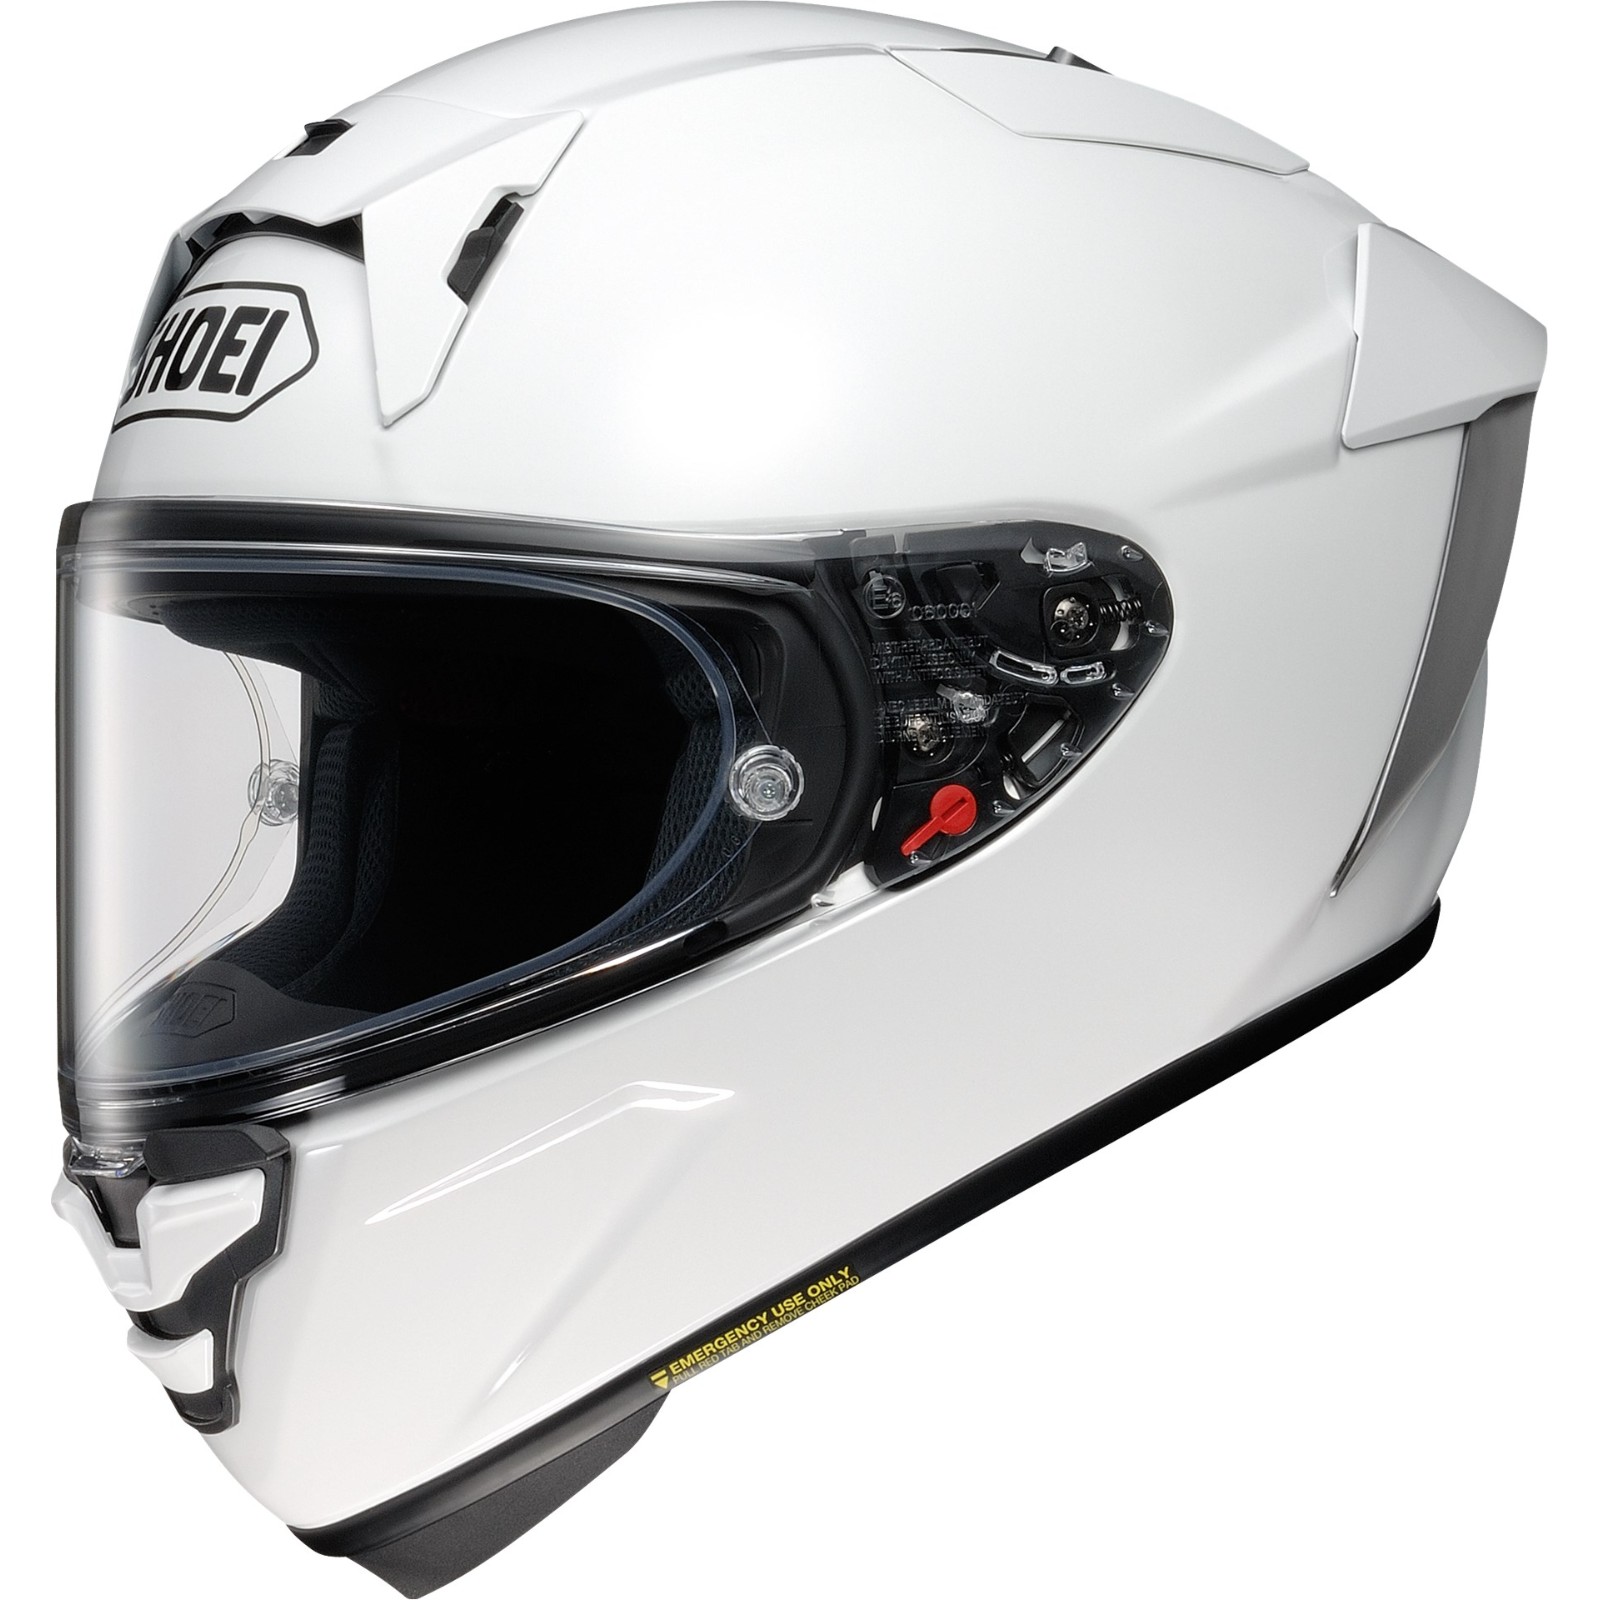 Motorradhelm Shoei X-SPR Pro white Racing Helm